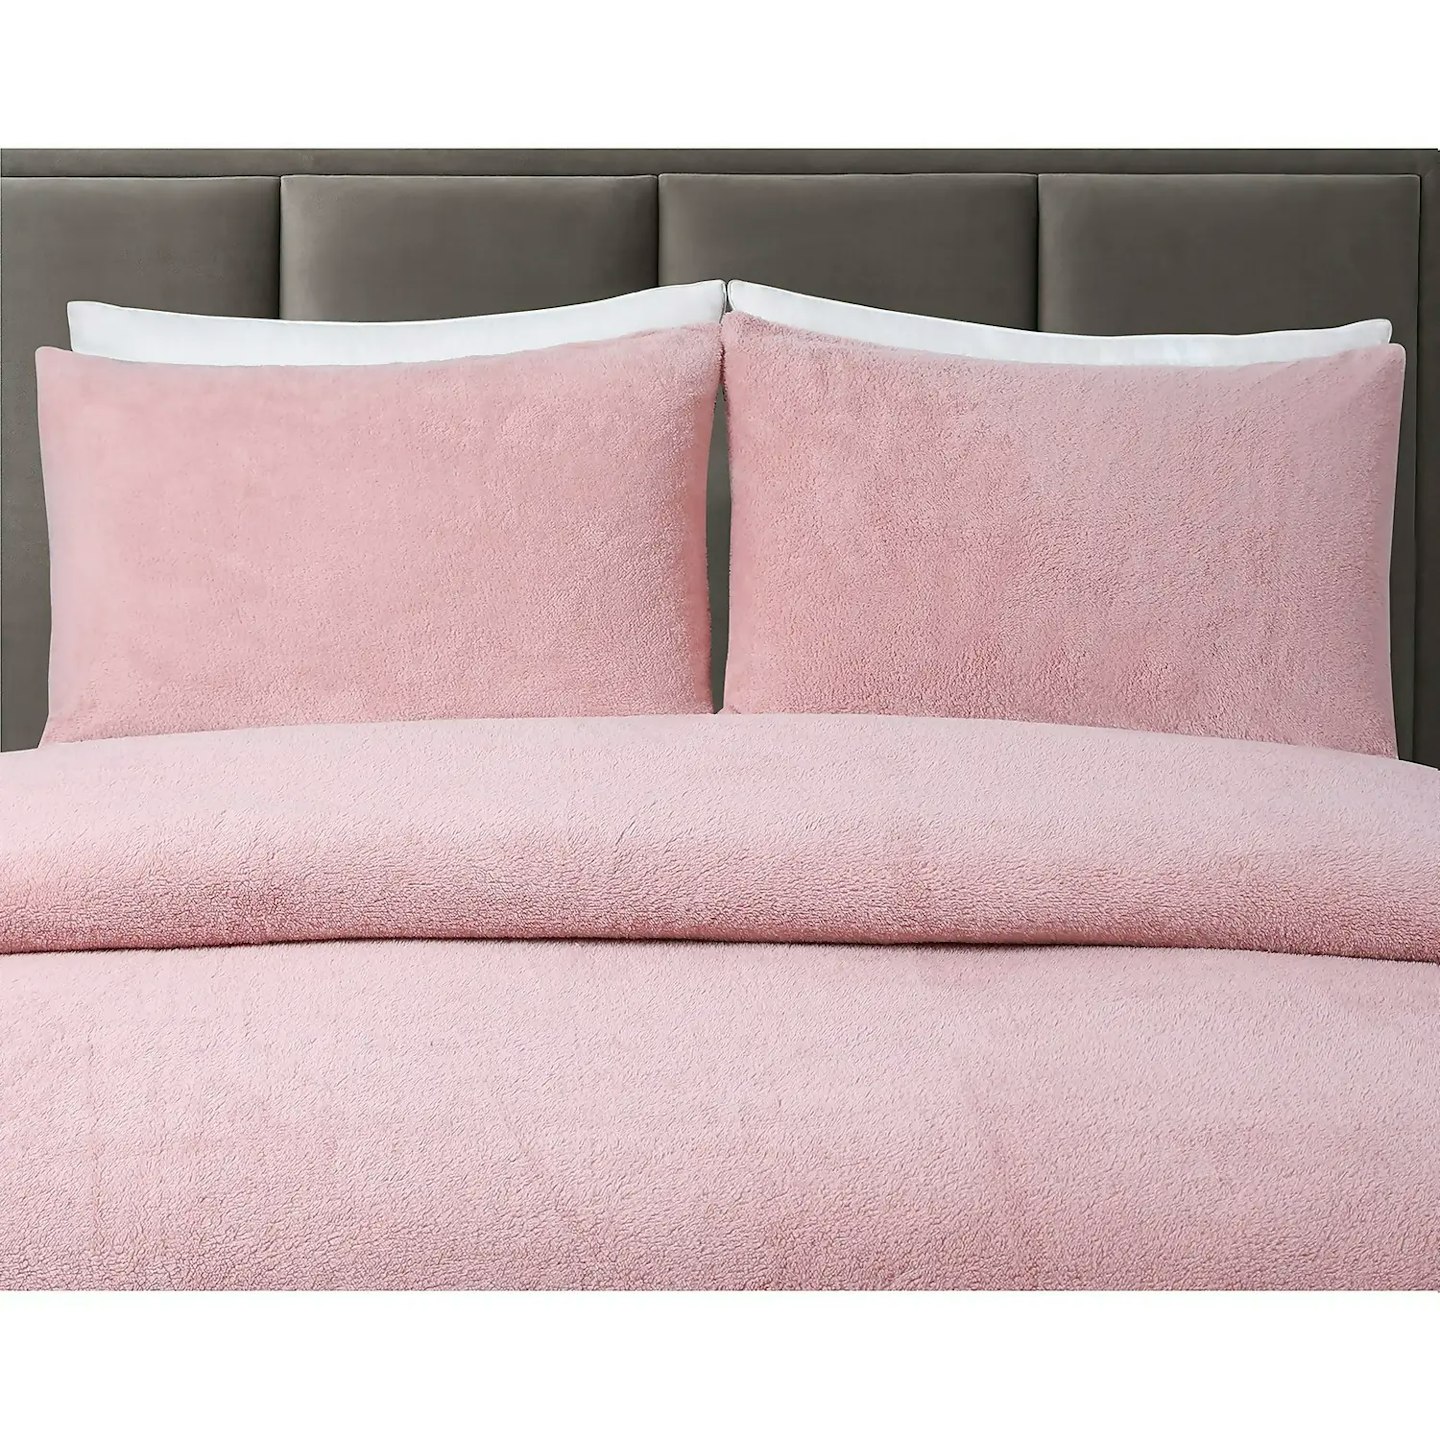 Homebase Snuggle Fleece Bedding Set - Blush - Double